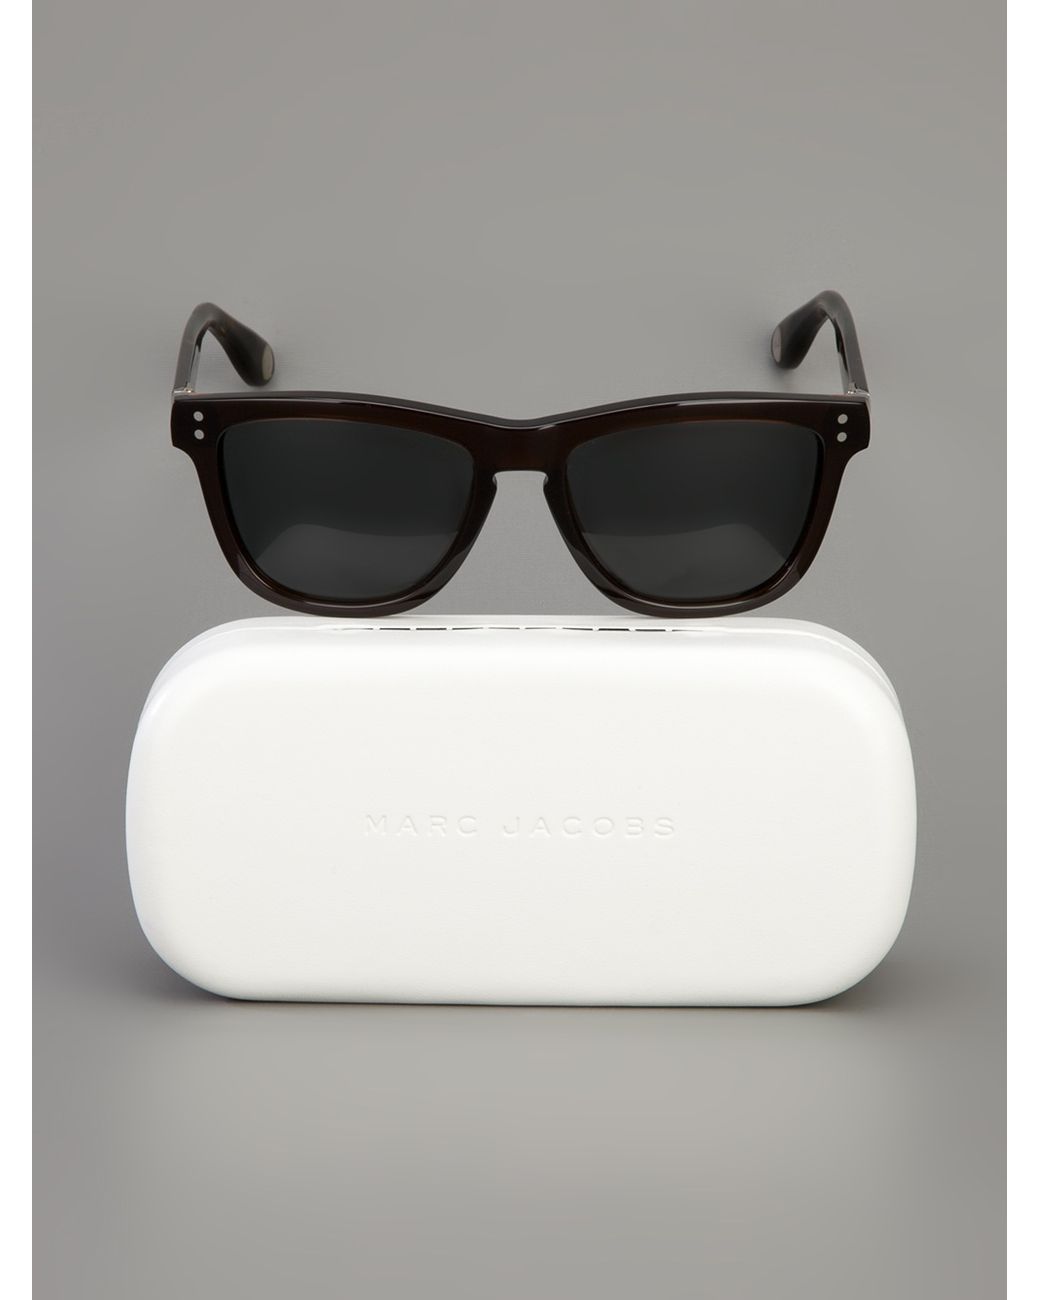 Top more than 126 marc jacobs sunglasses wayfarer super hot